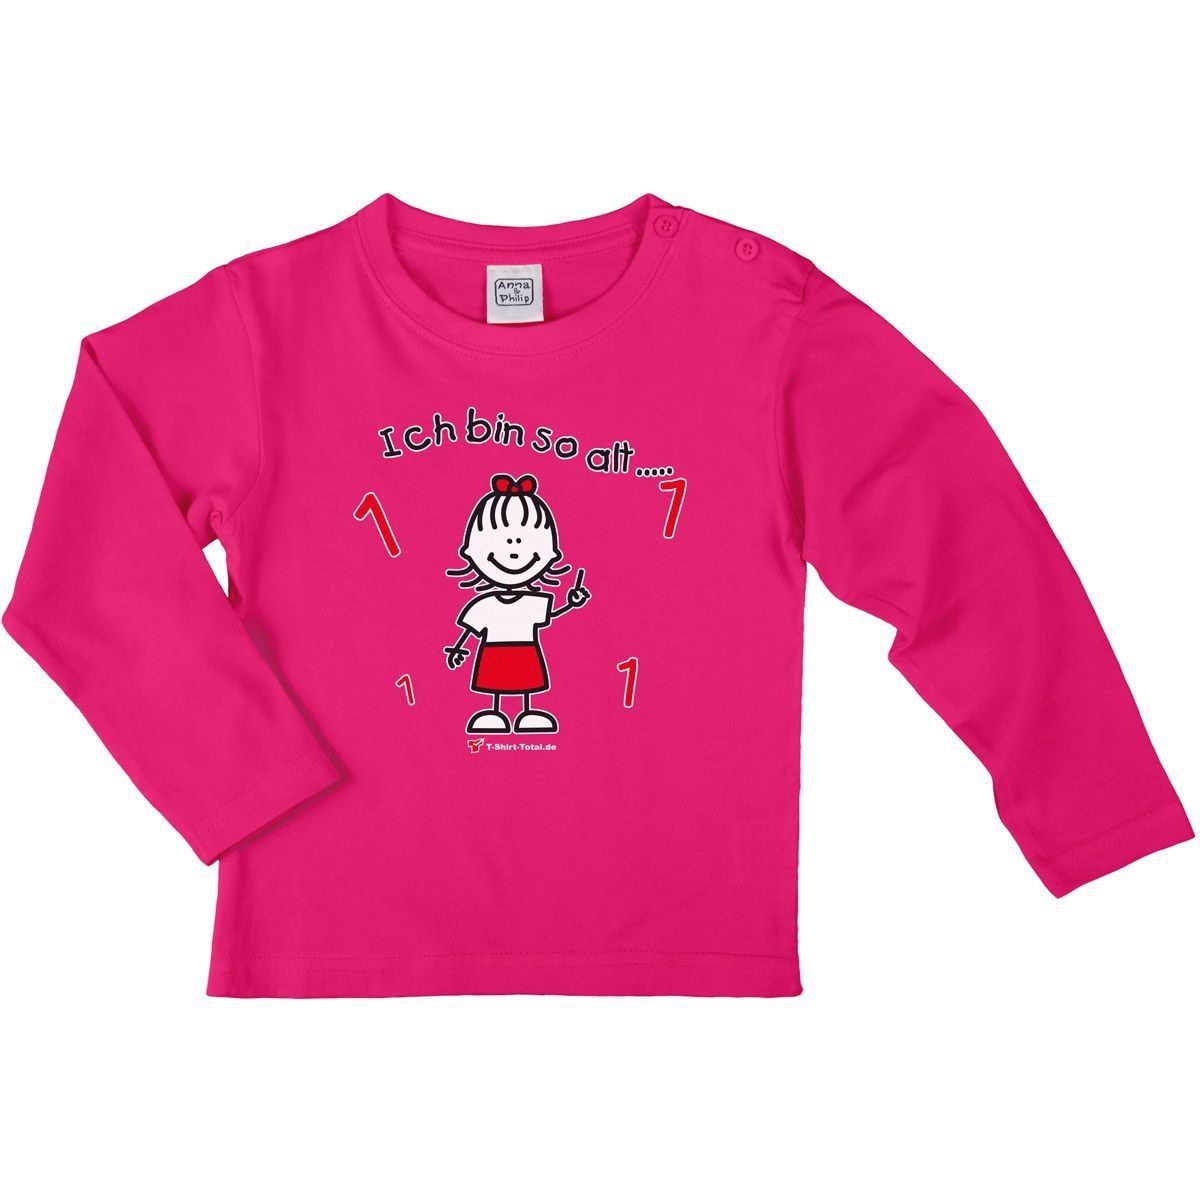 Mädchen so alt 1 Kinder Langarm Shirt pink 68 / 74